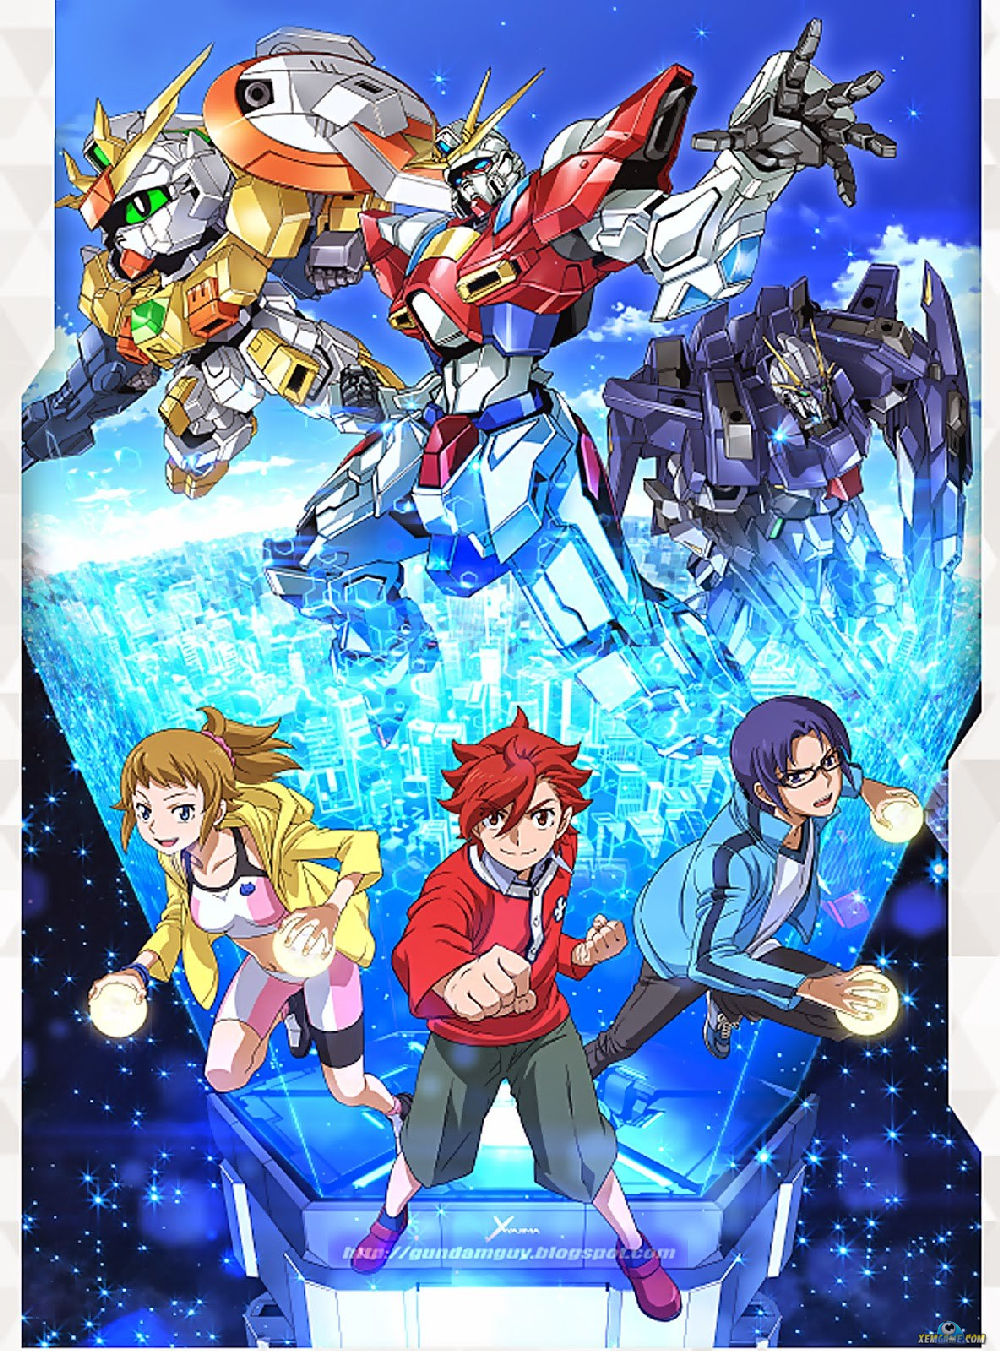 Gundam_26_5_2016_1.JPG (1000×1351)